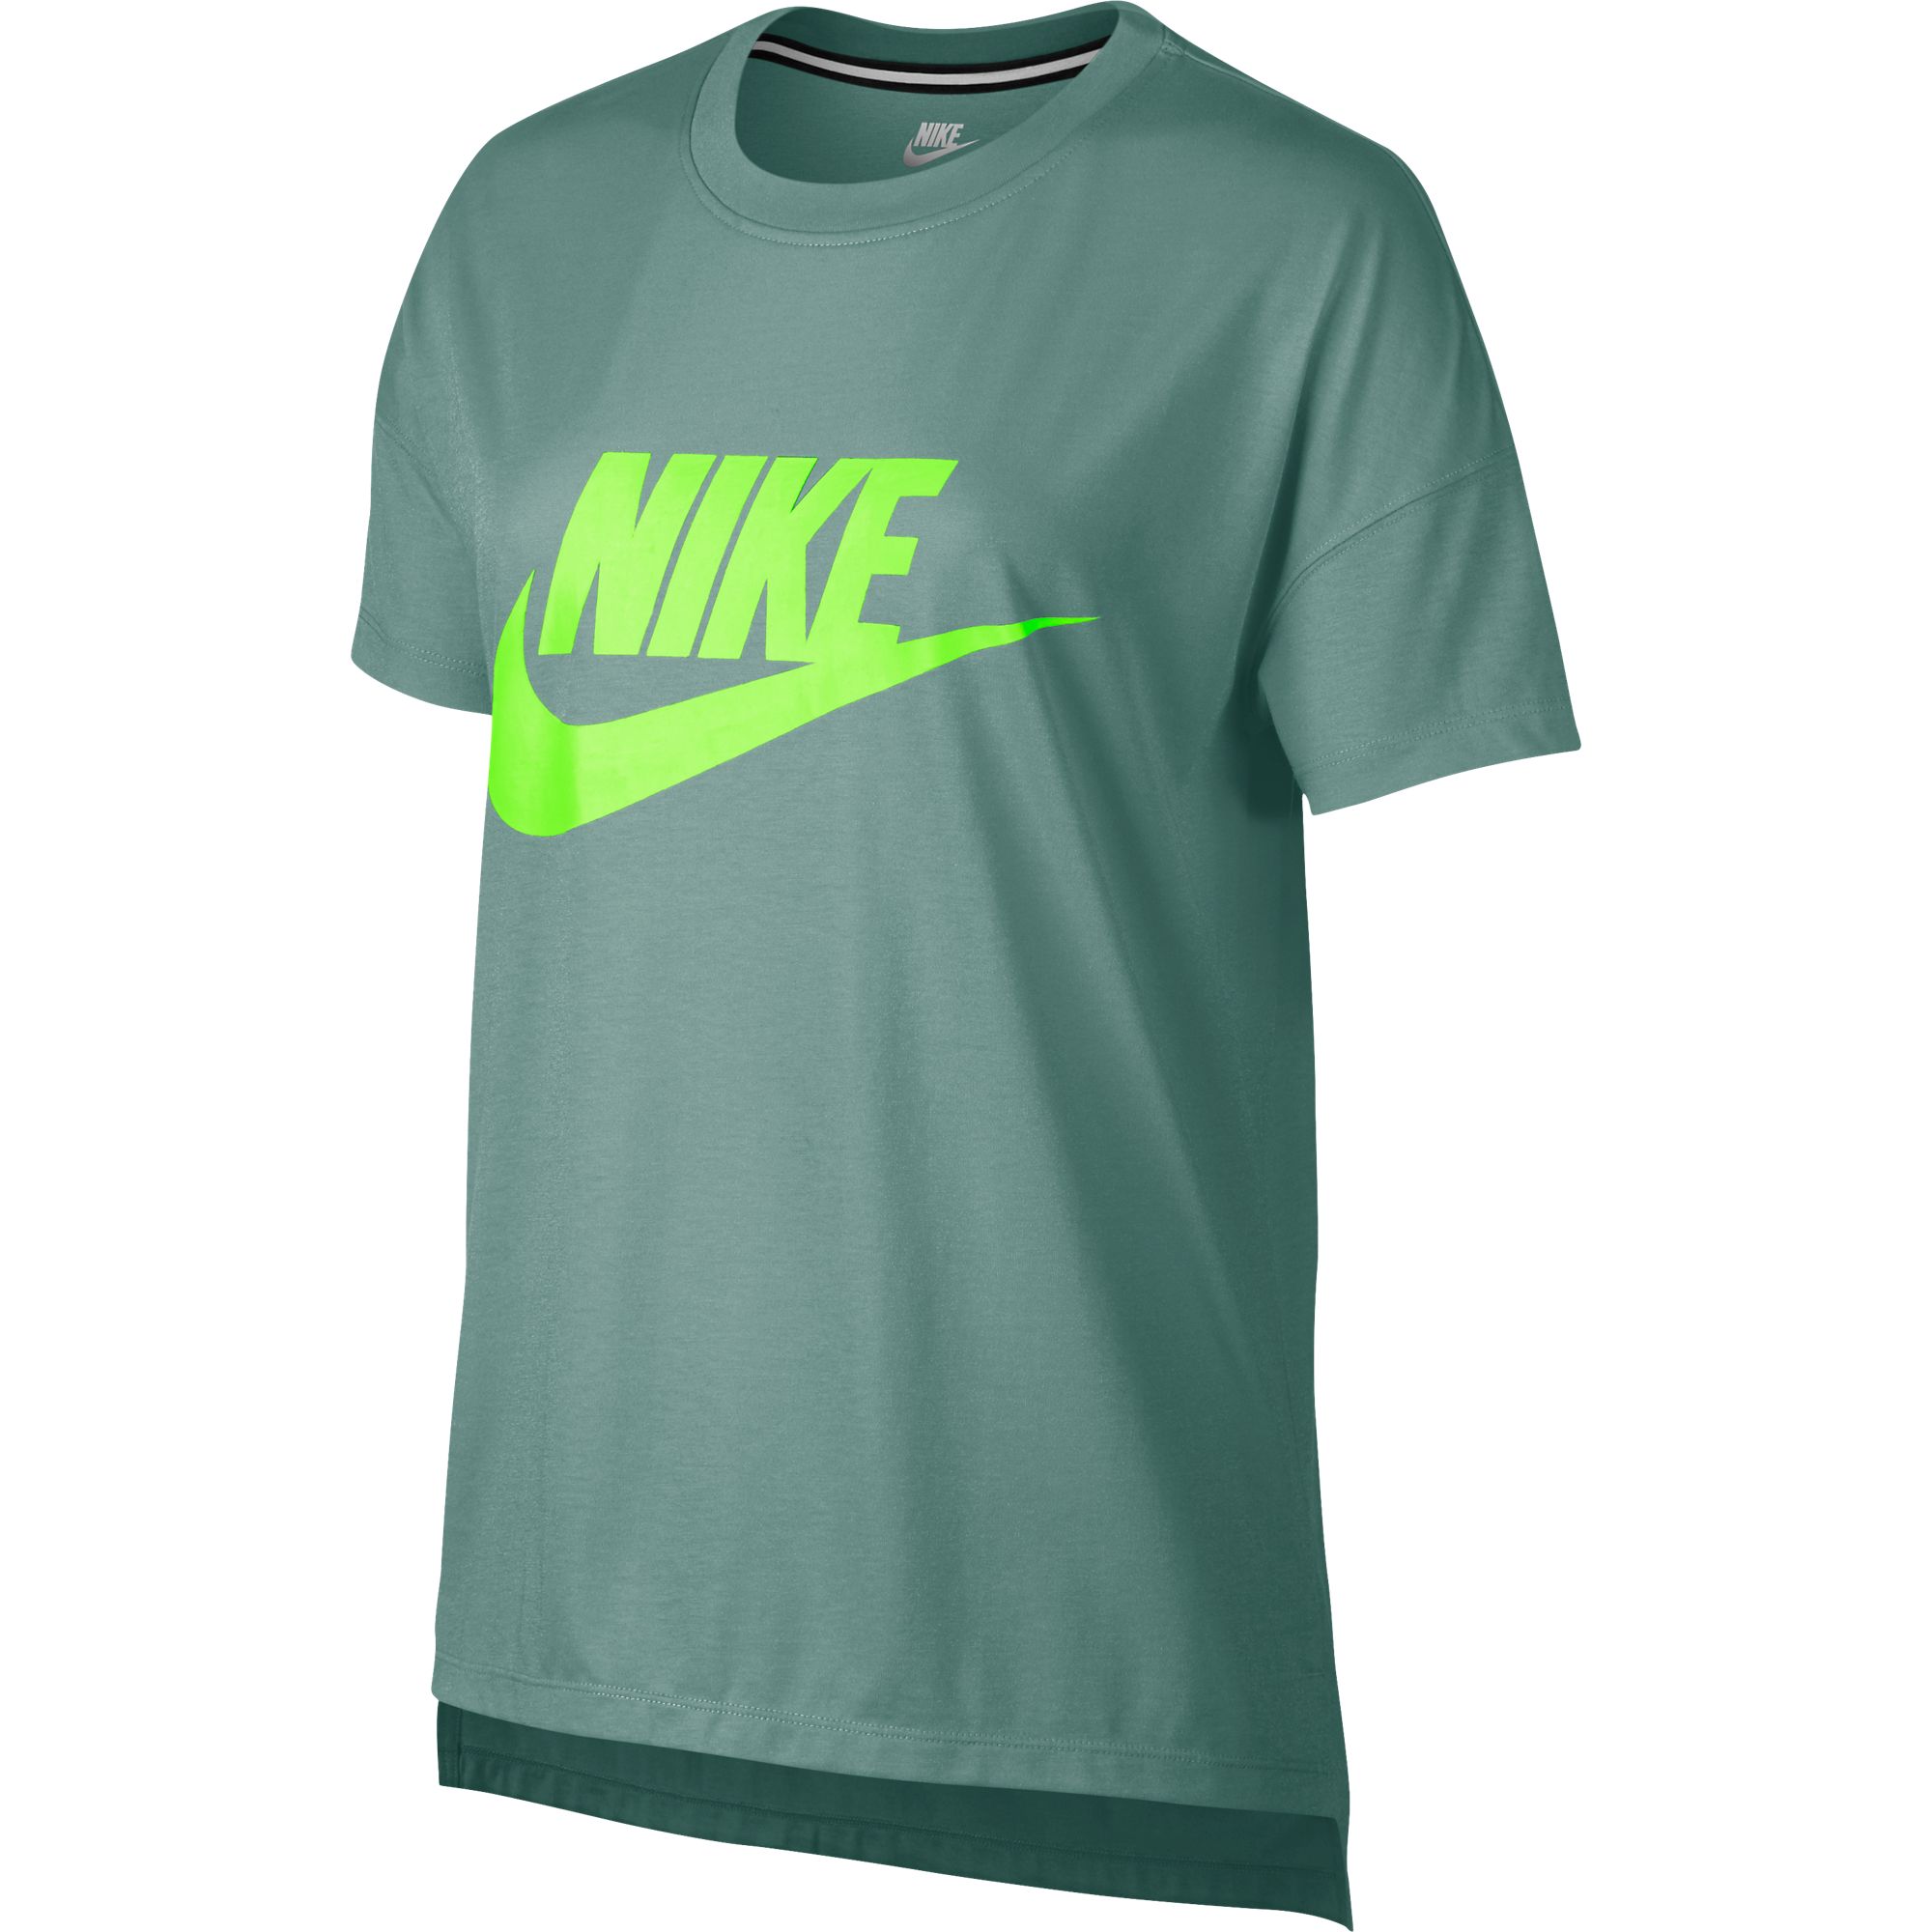 ghost green nike shirt